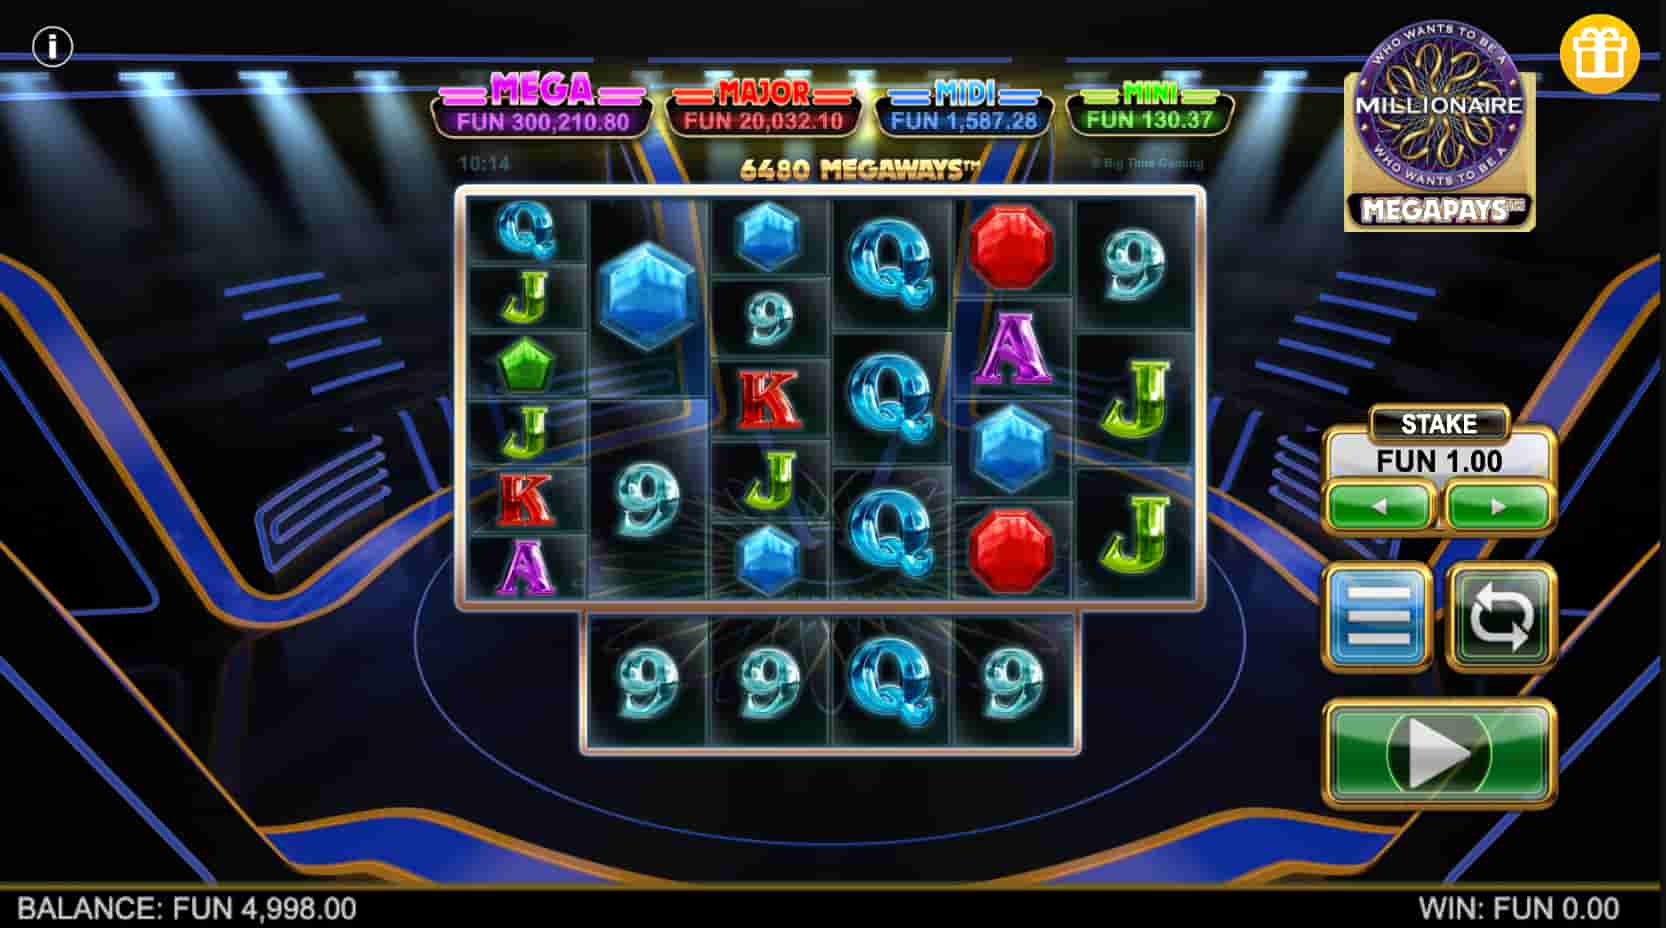 Millionaire Megapays screenshot 2